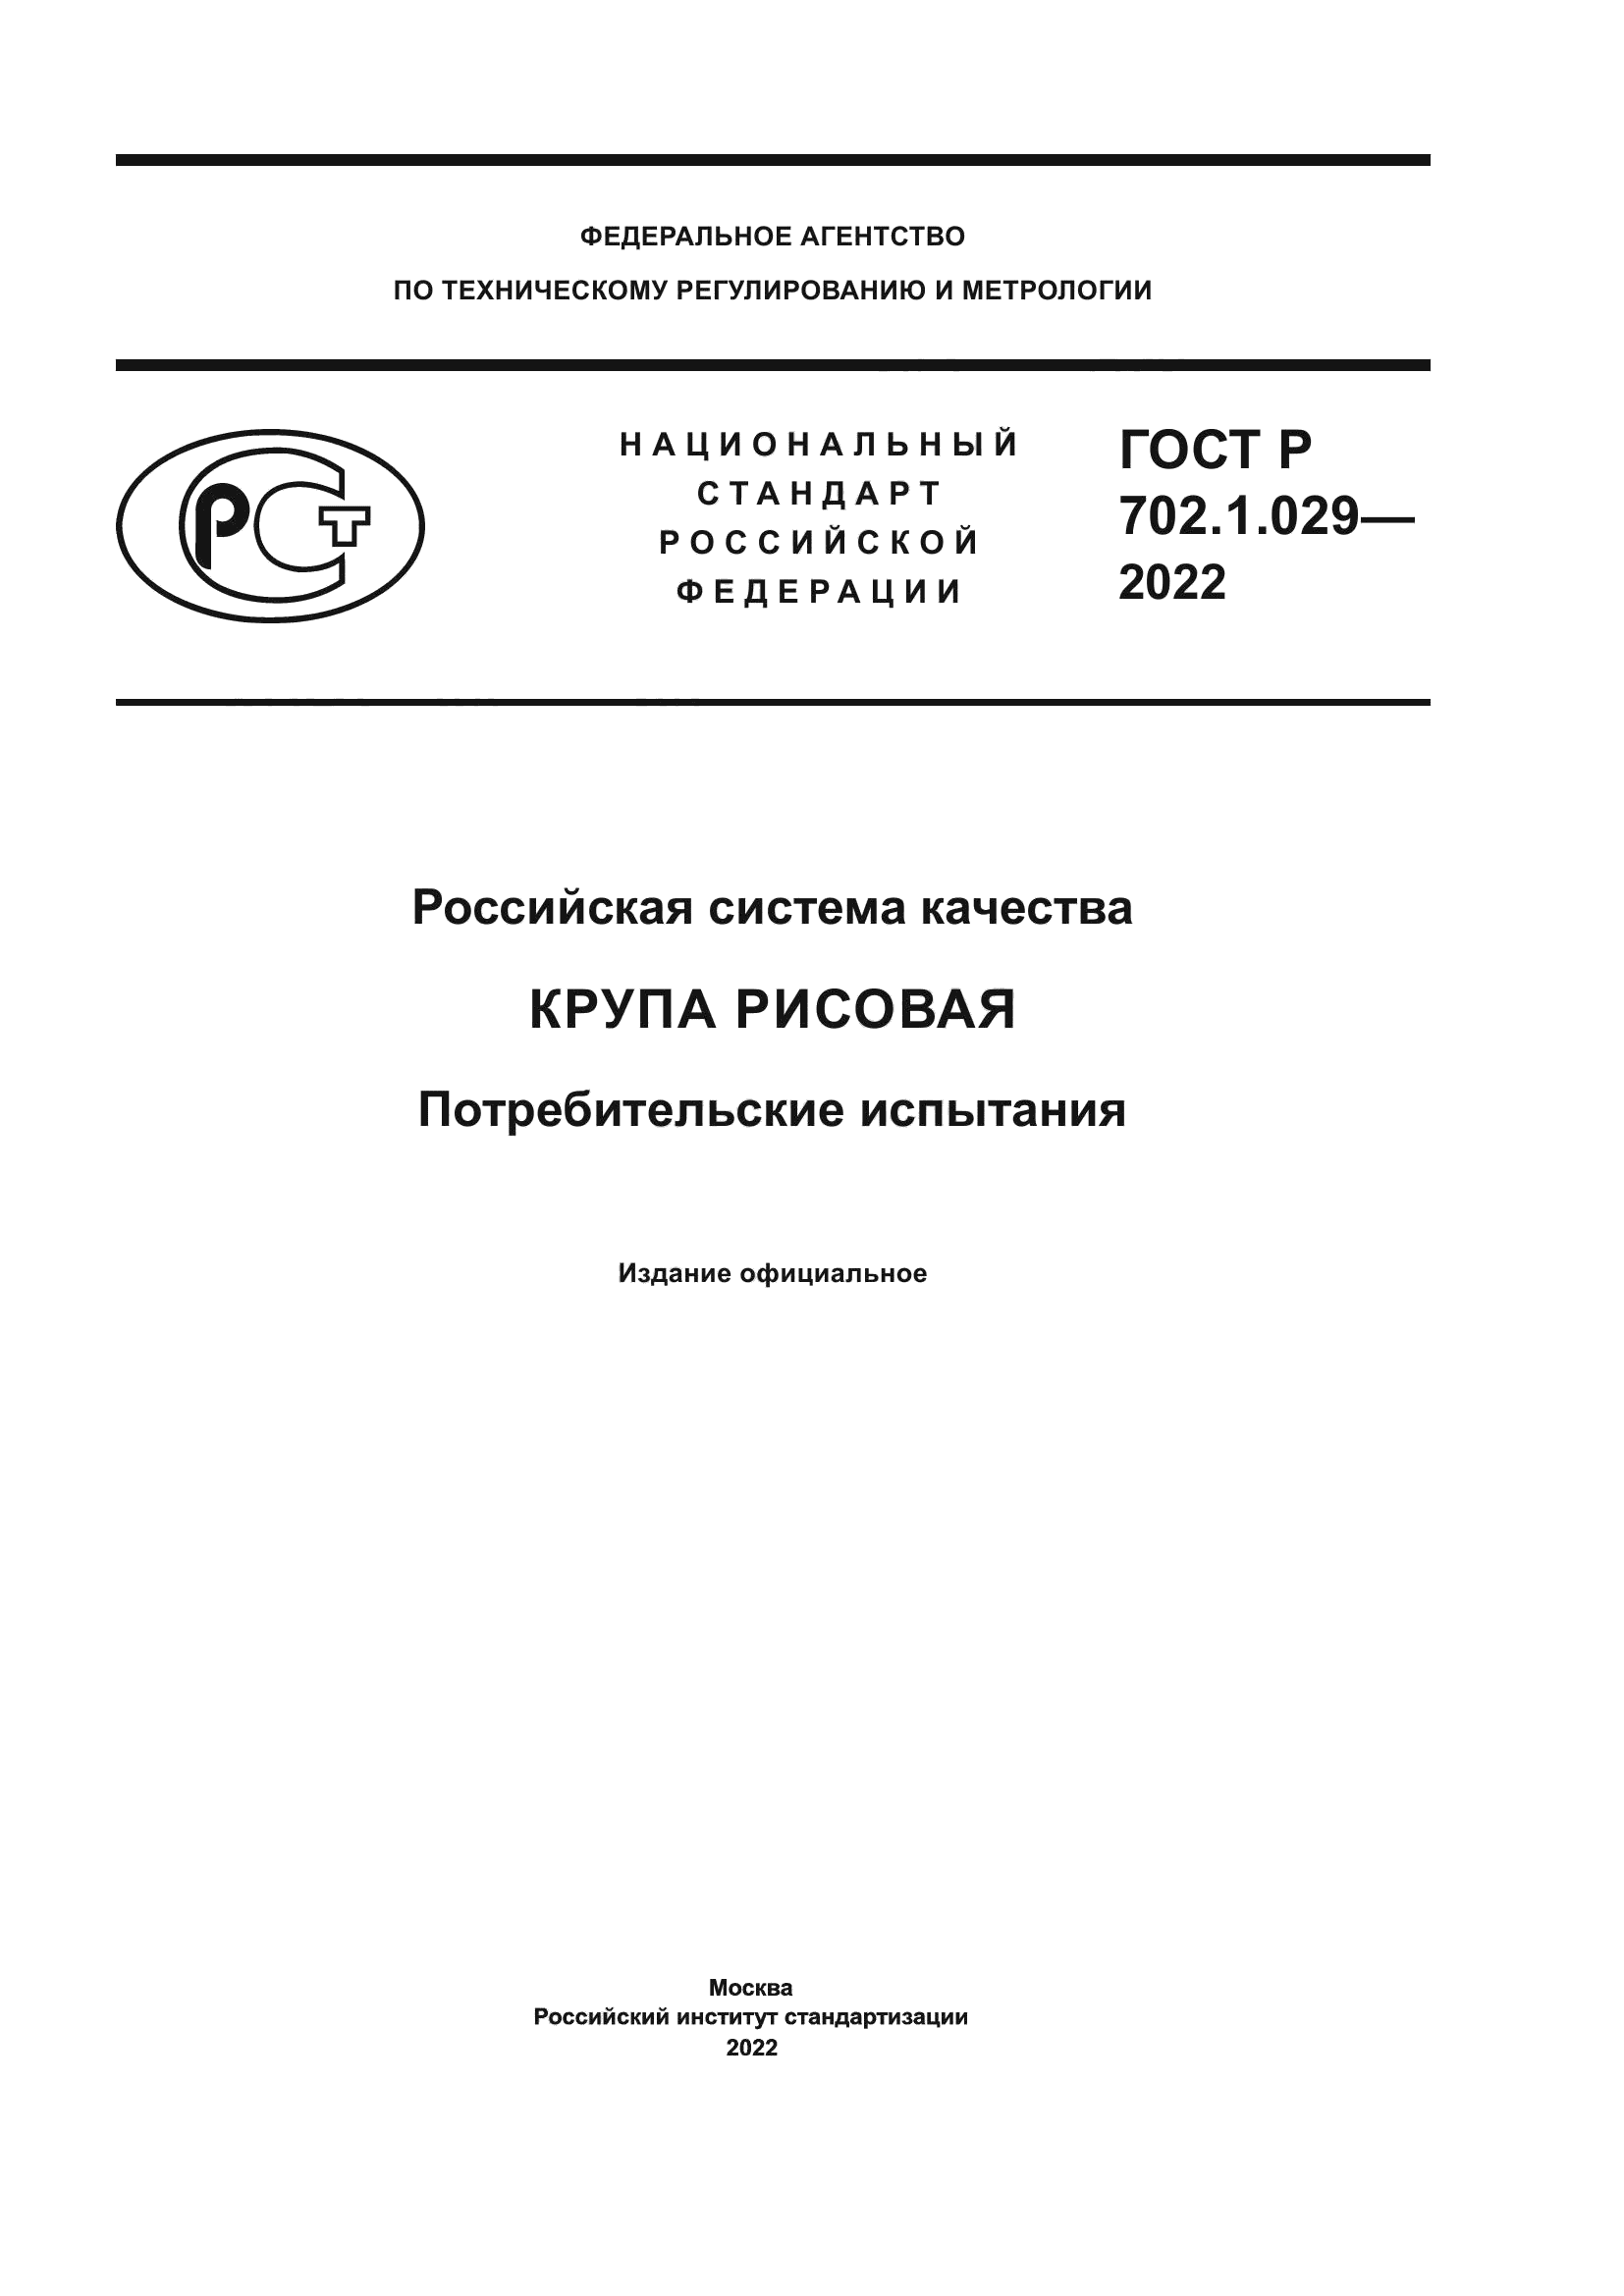 ГОСТ Р 702.1.029-2022